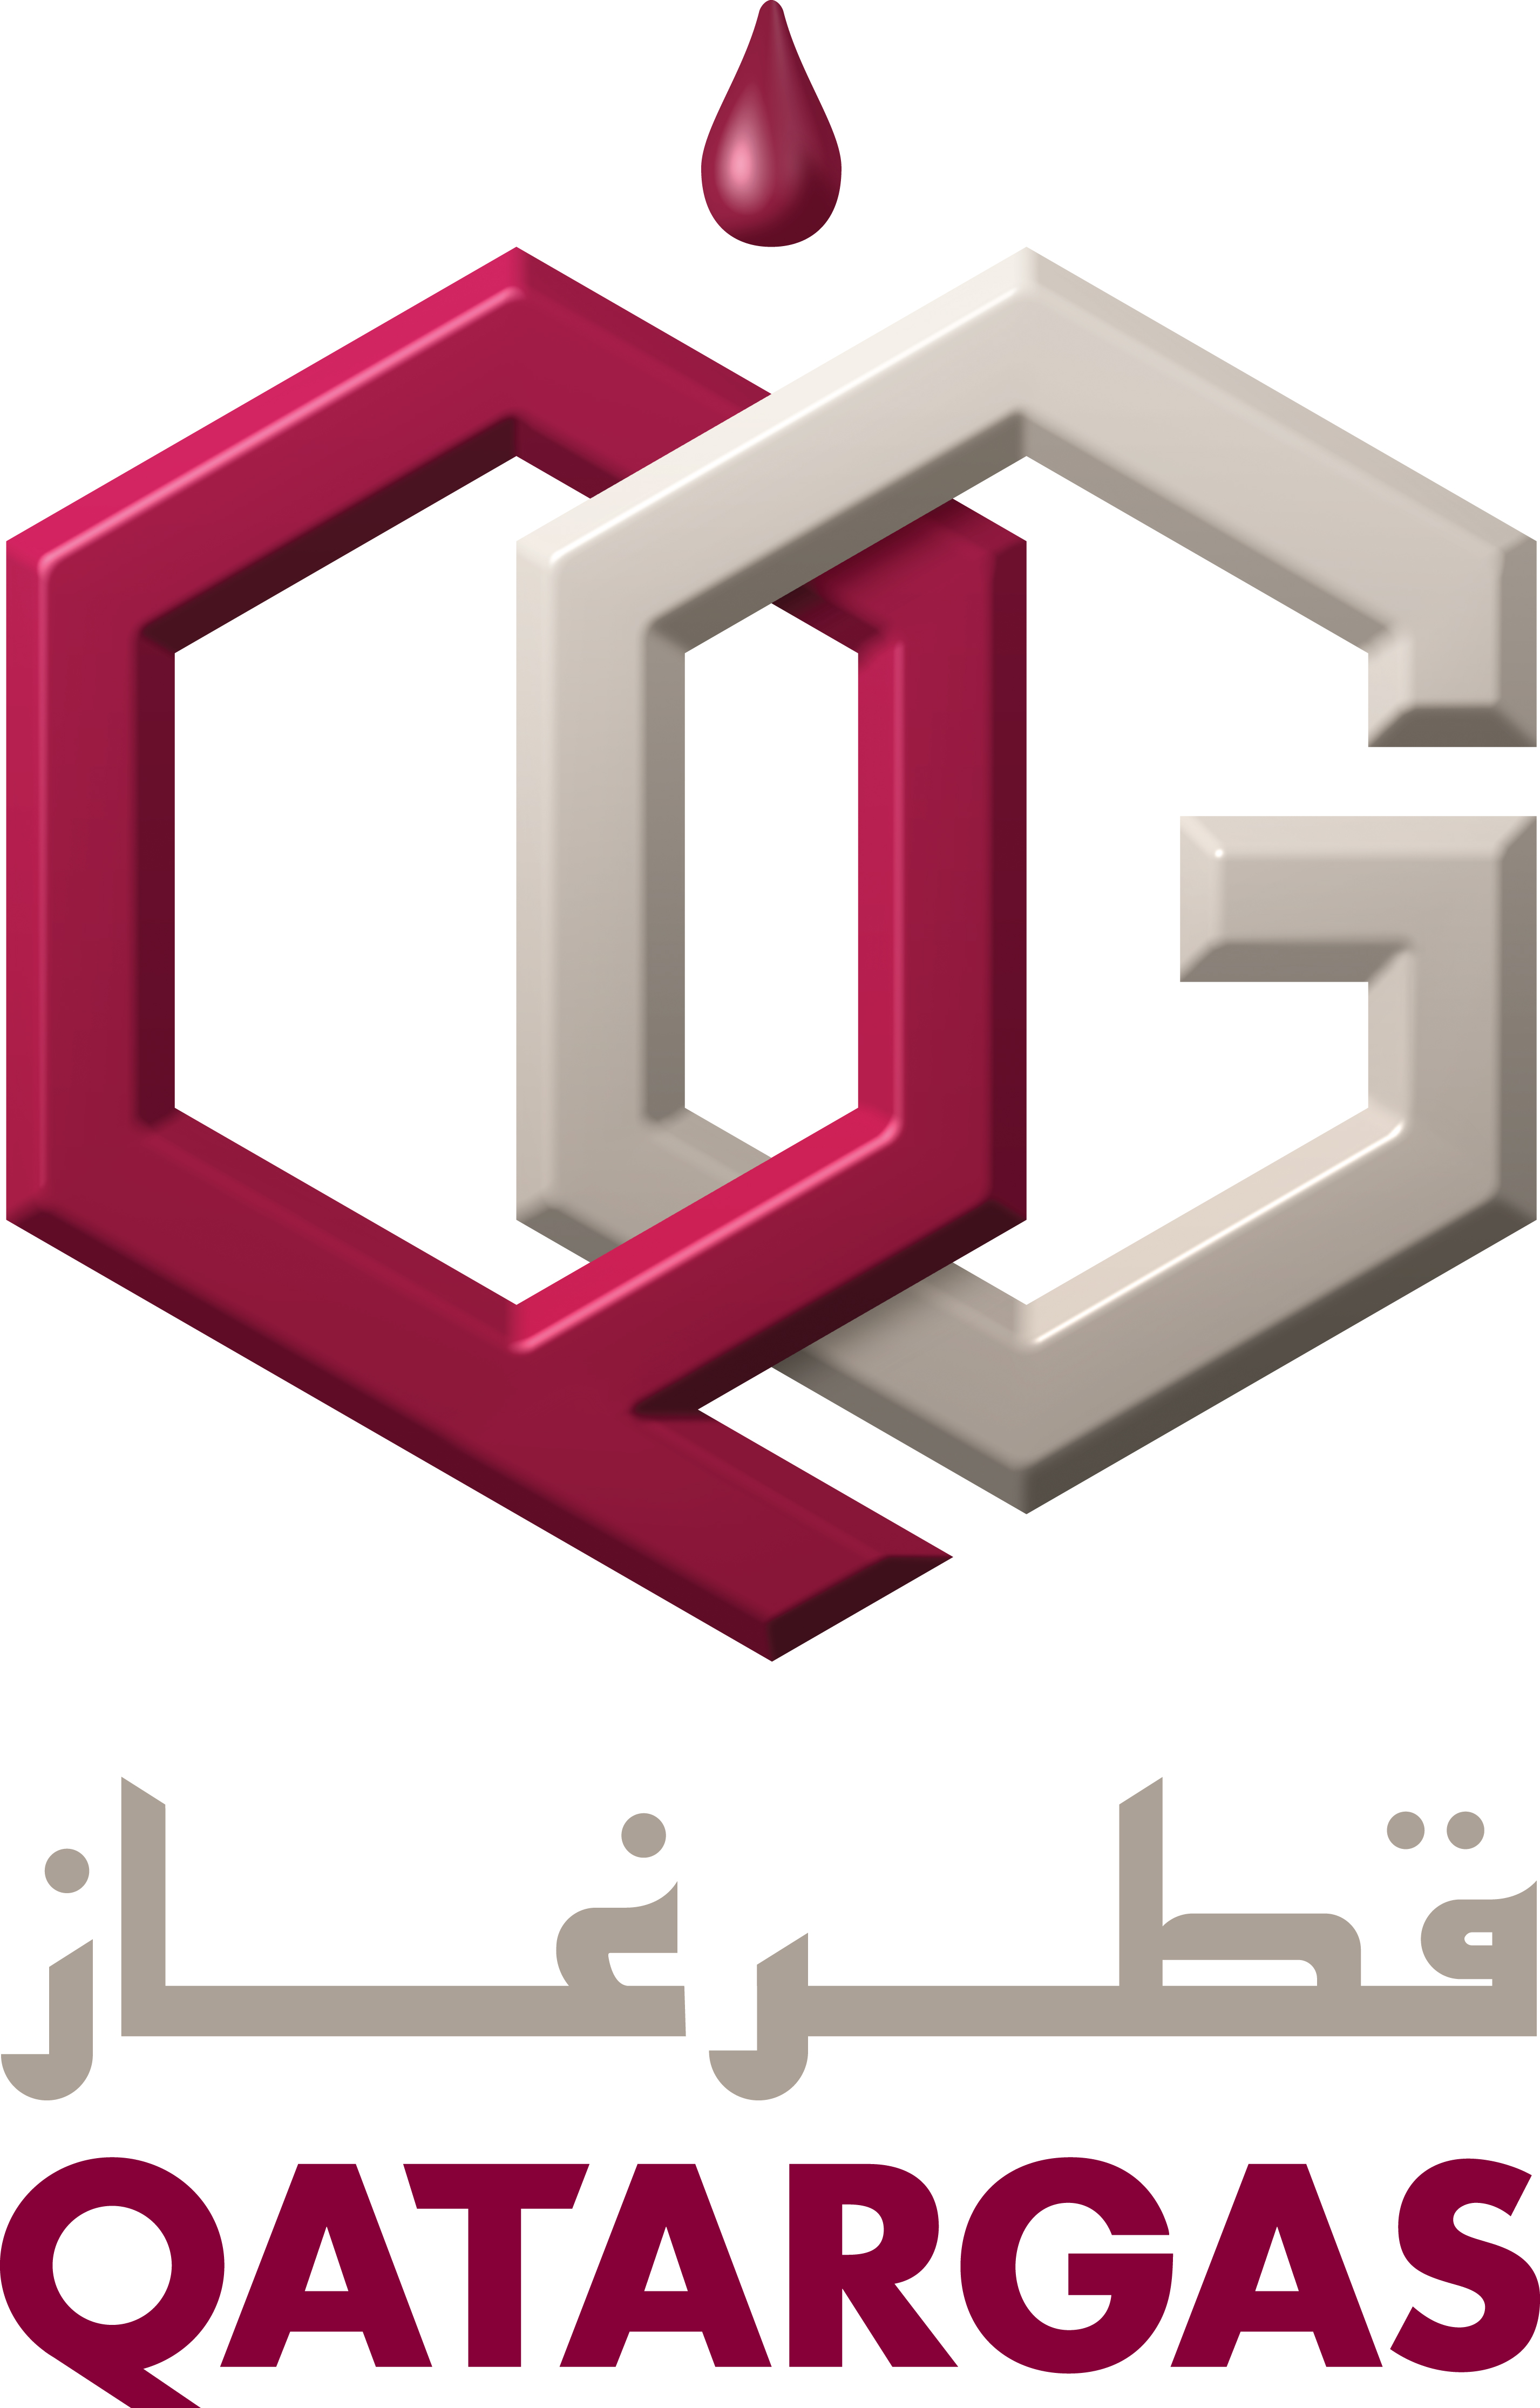 Qatargas Brand Logo